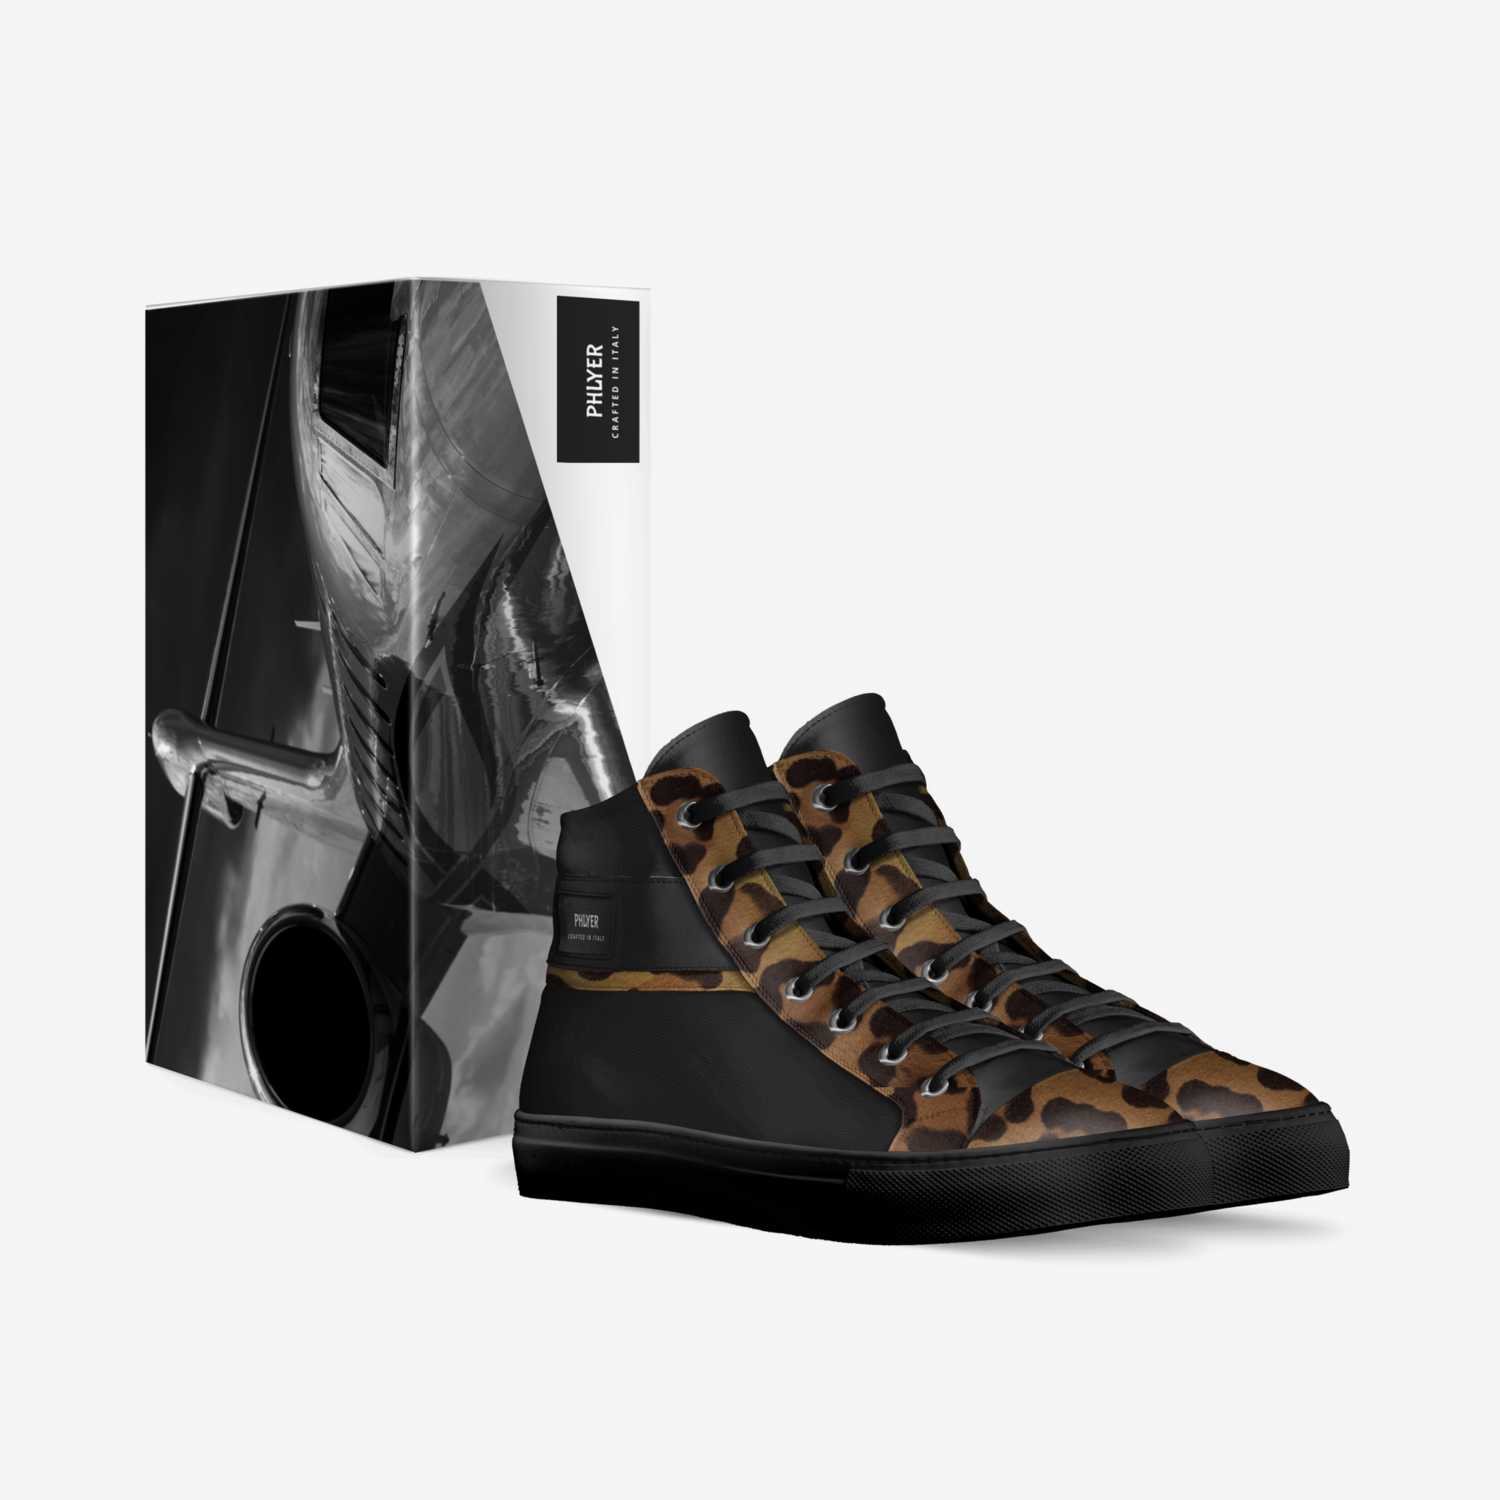 DarkJungle High II custom made in Italy shoes by Moyo Jones | Box view